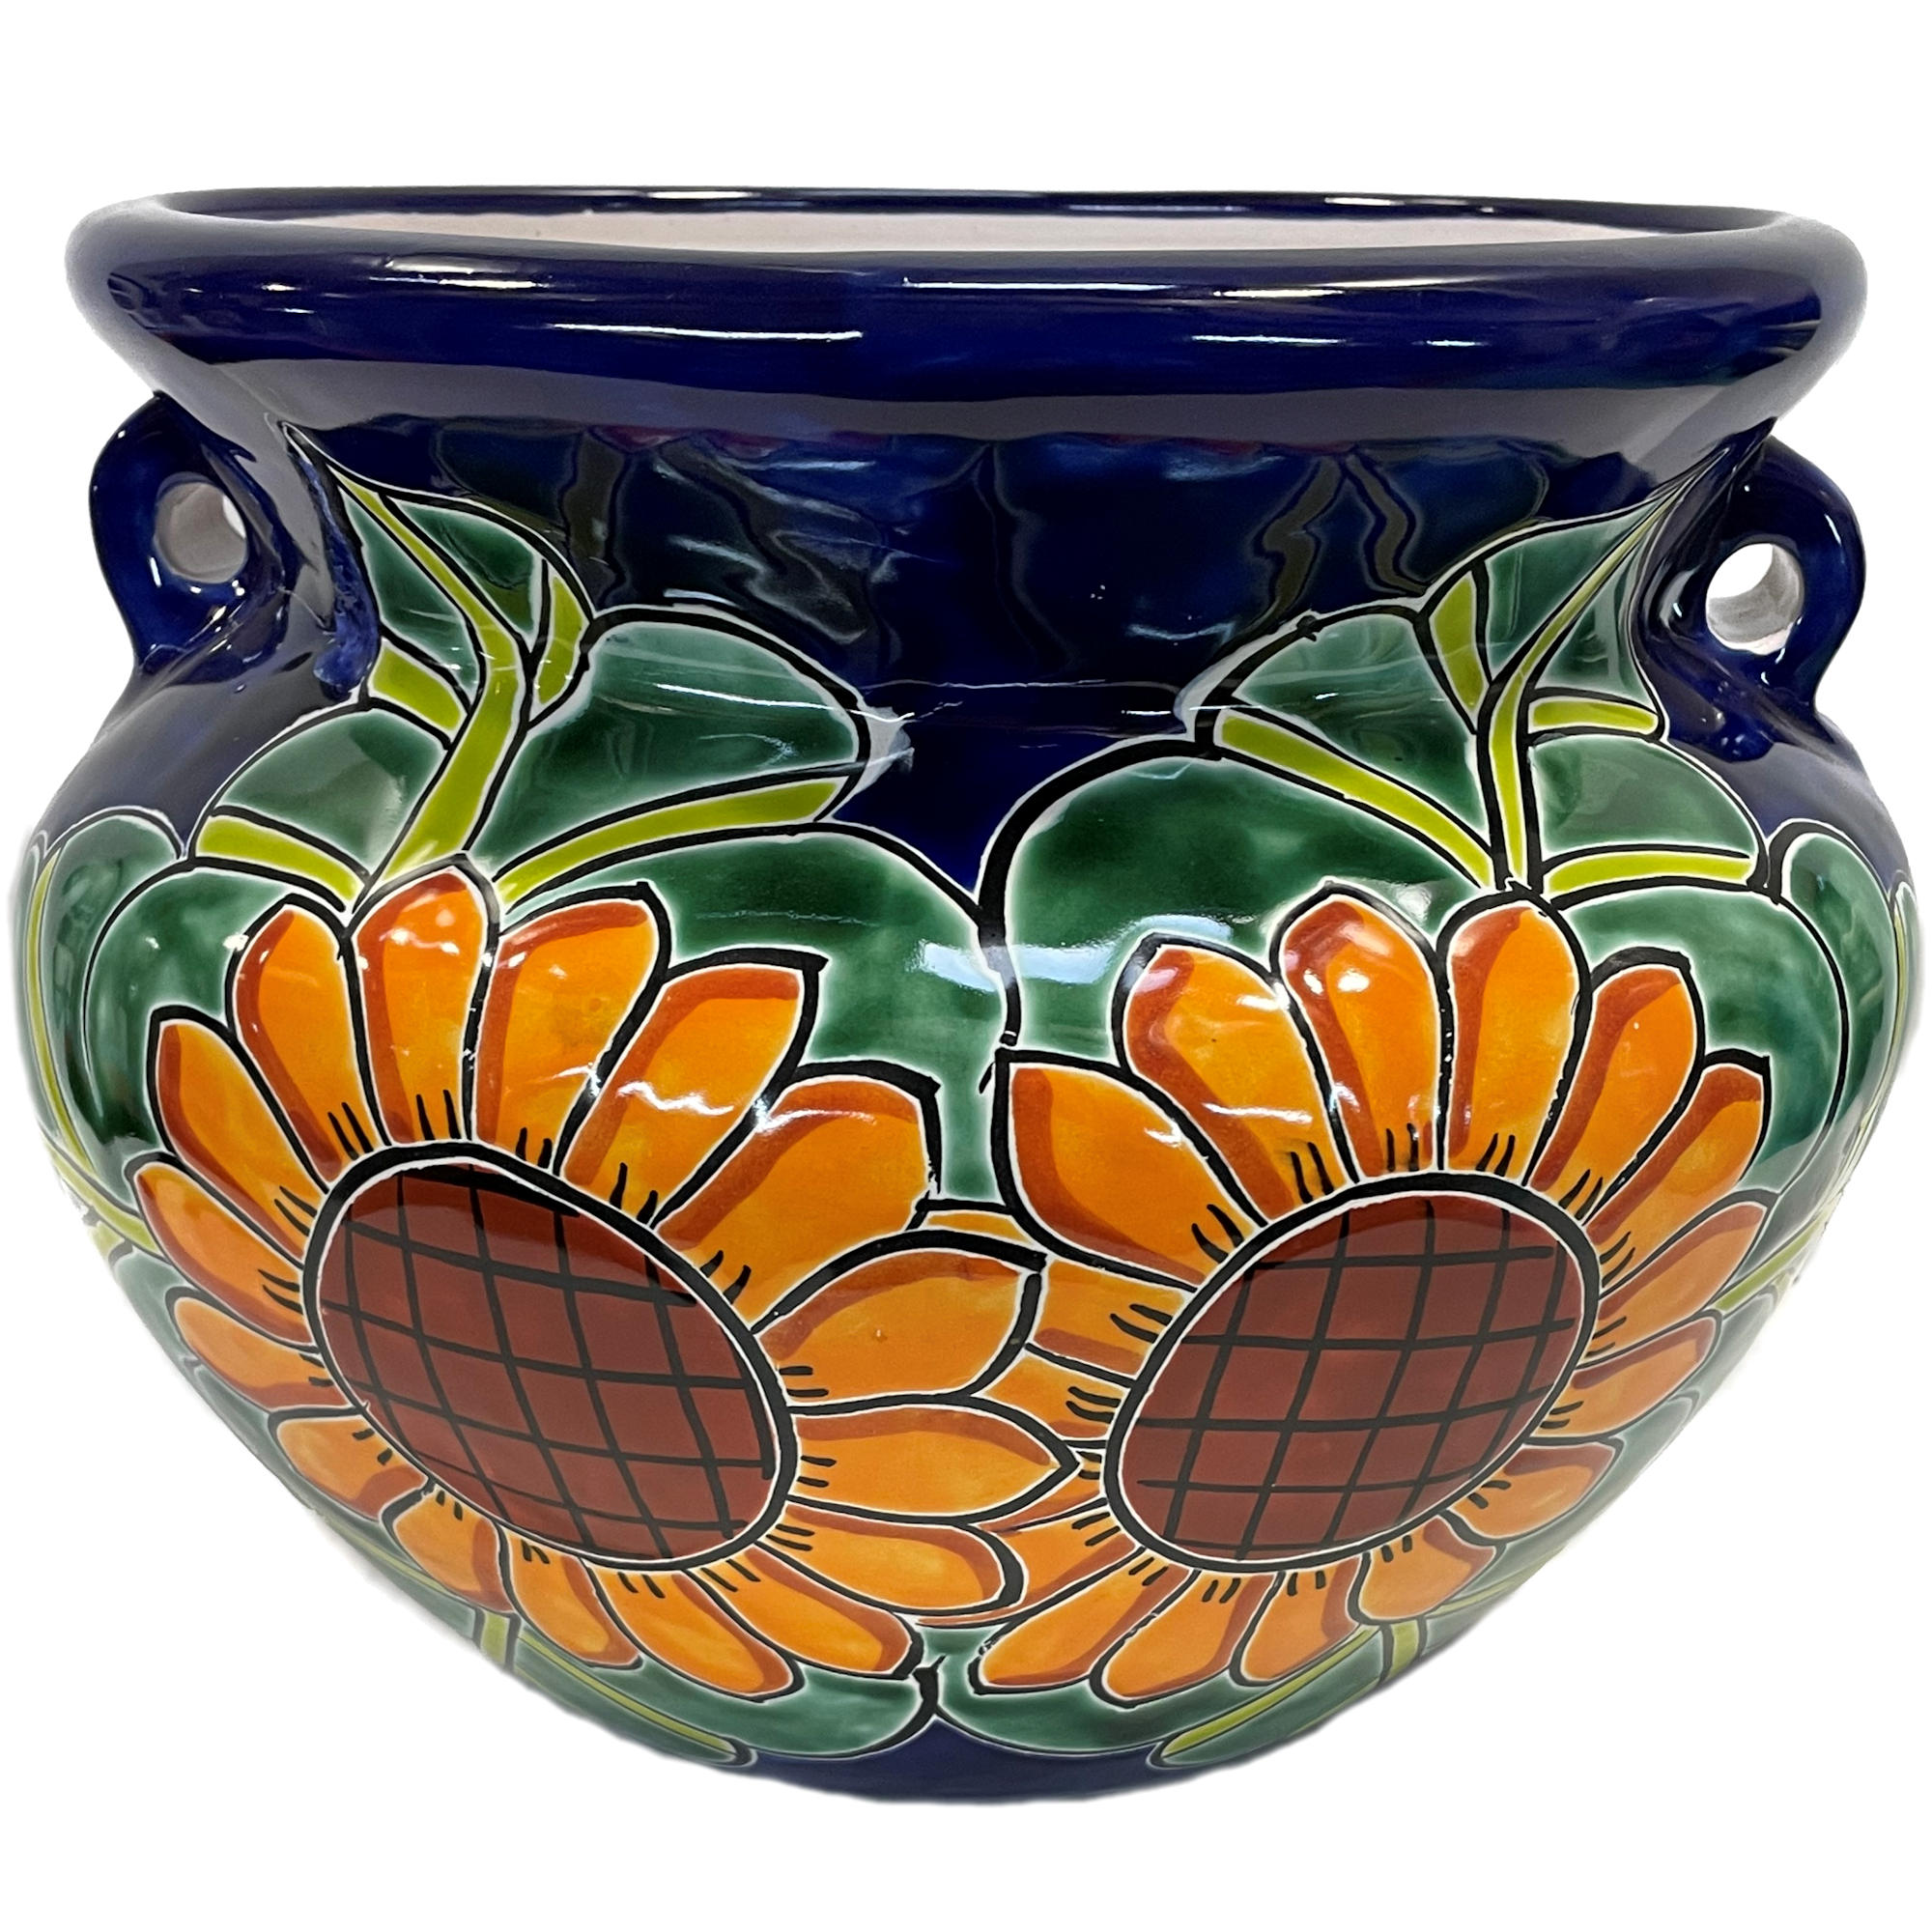 TalaMex Small-Sized Sunflower Mexican Colors Talavera Ceramic Garden Pot